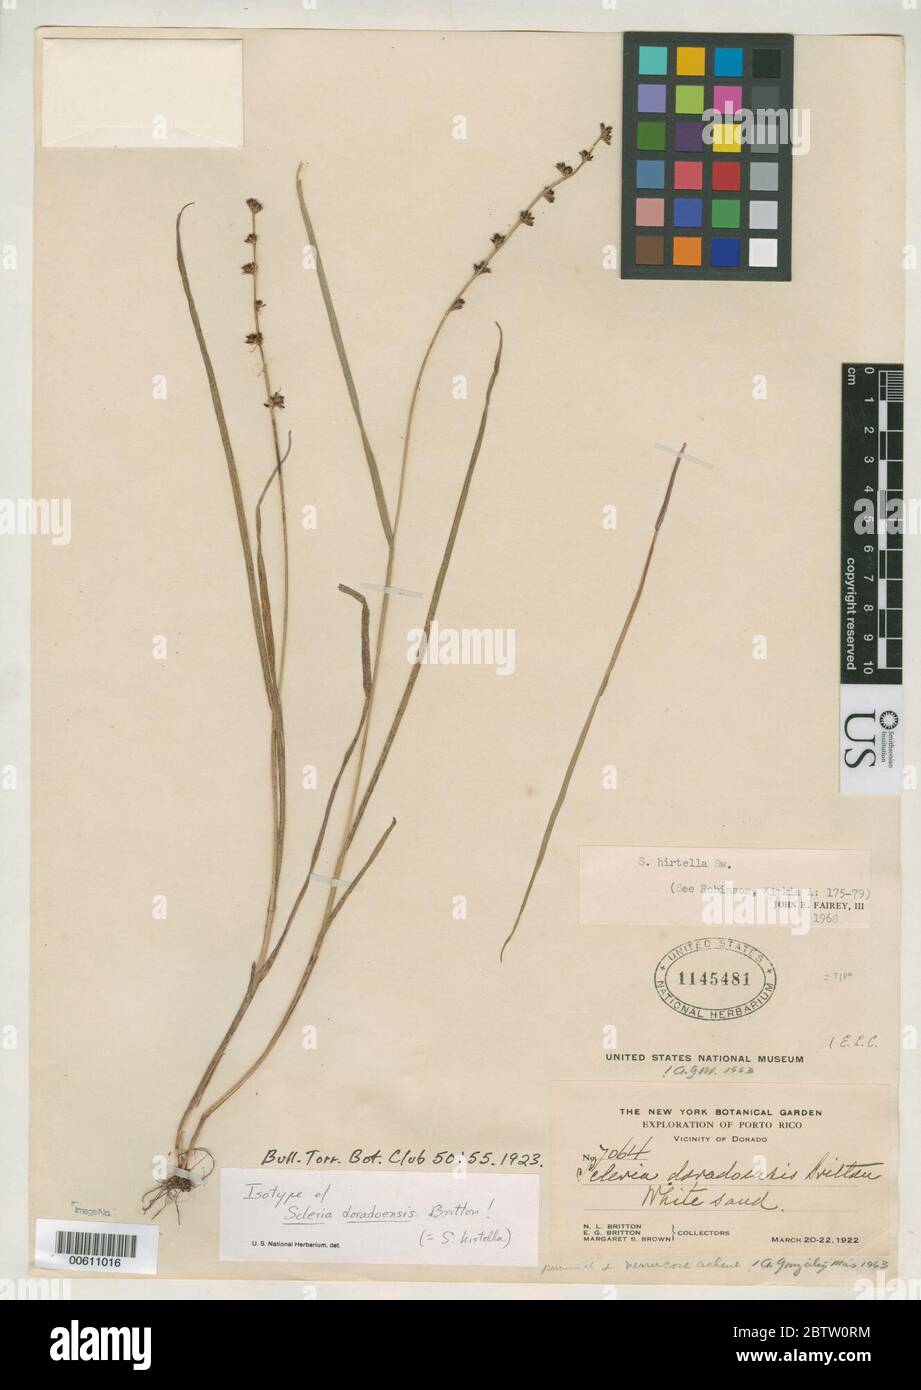 Scleria doradoensis Britton. Stock Photo